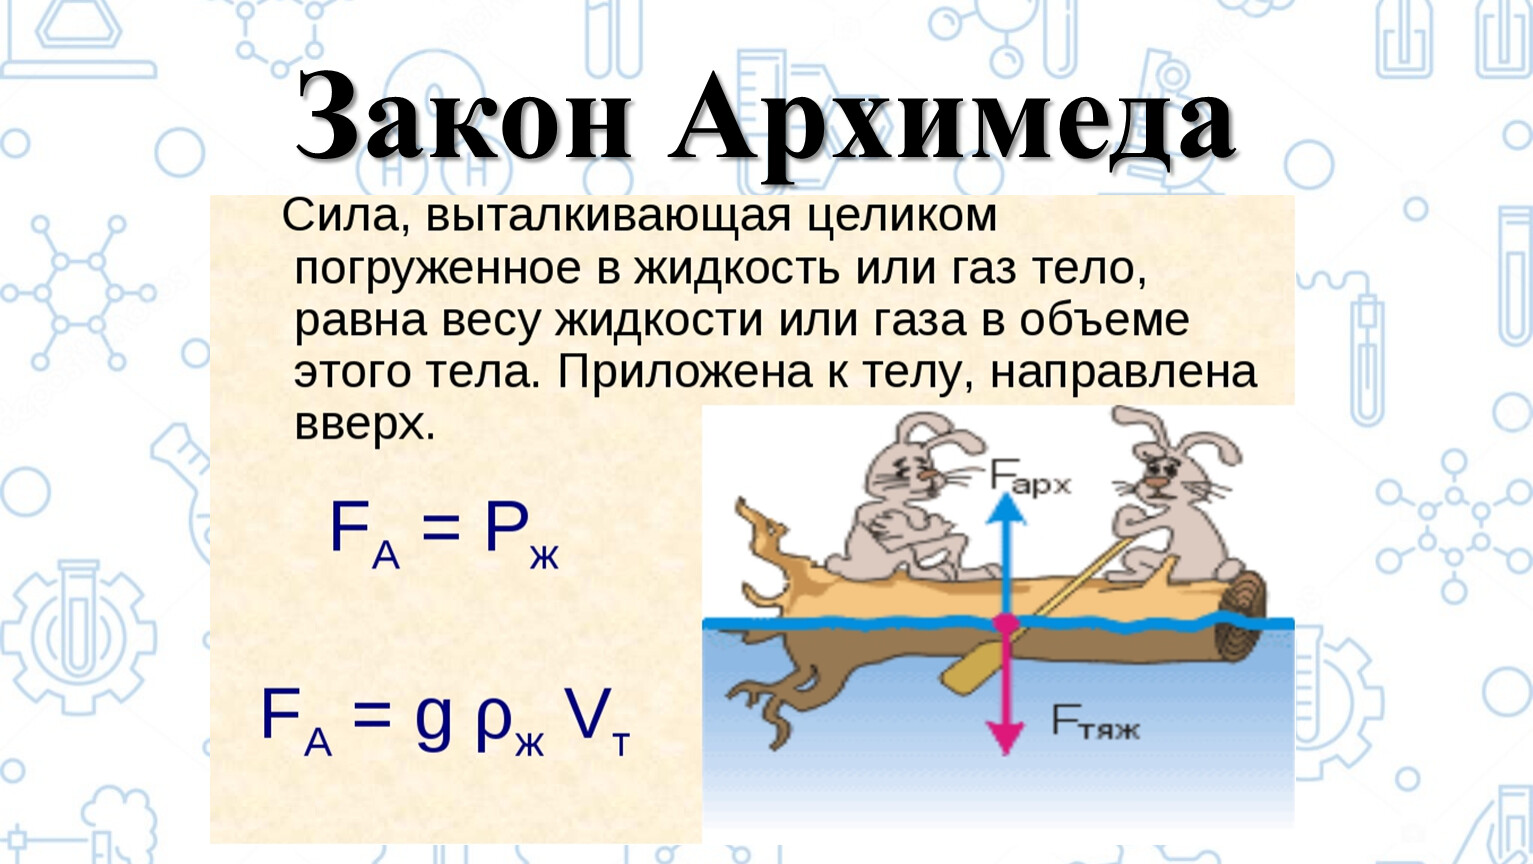 Сила архимеда газа формула. Формулы по физике 7 класс сила Архимеда. Сила Архимеда формула 7 класс. Сила Архимеда 7 класс физика. Закон Архимеда 7 класс физика формула.